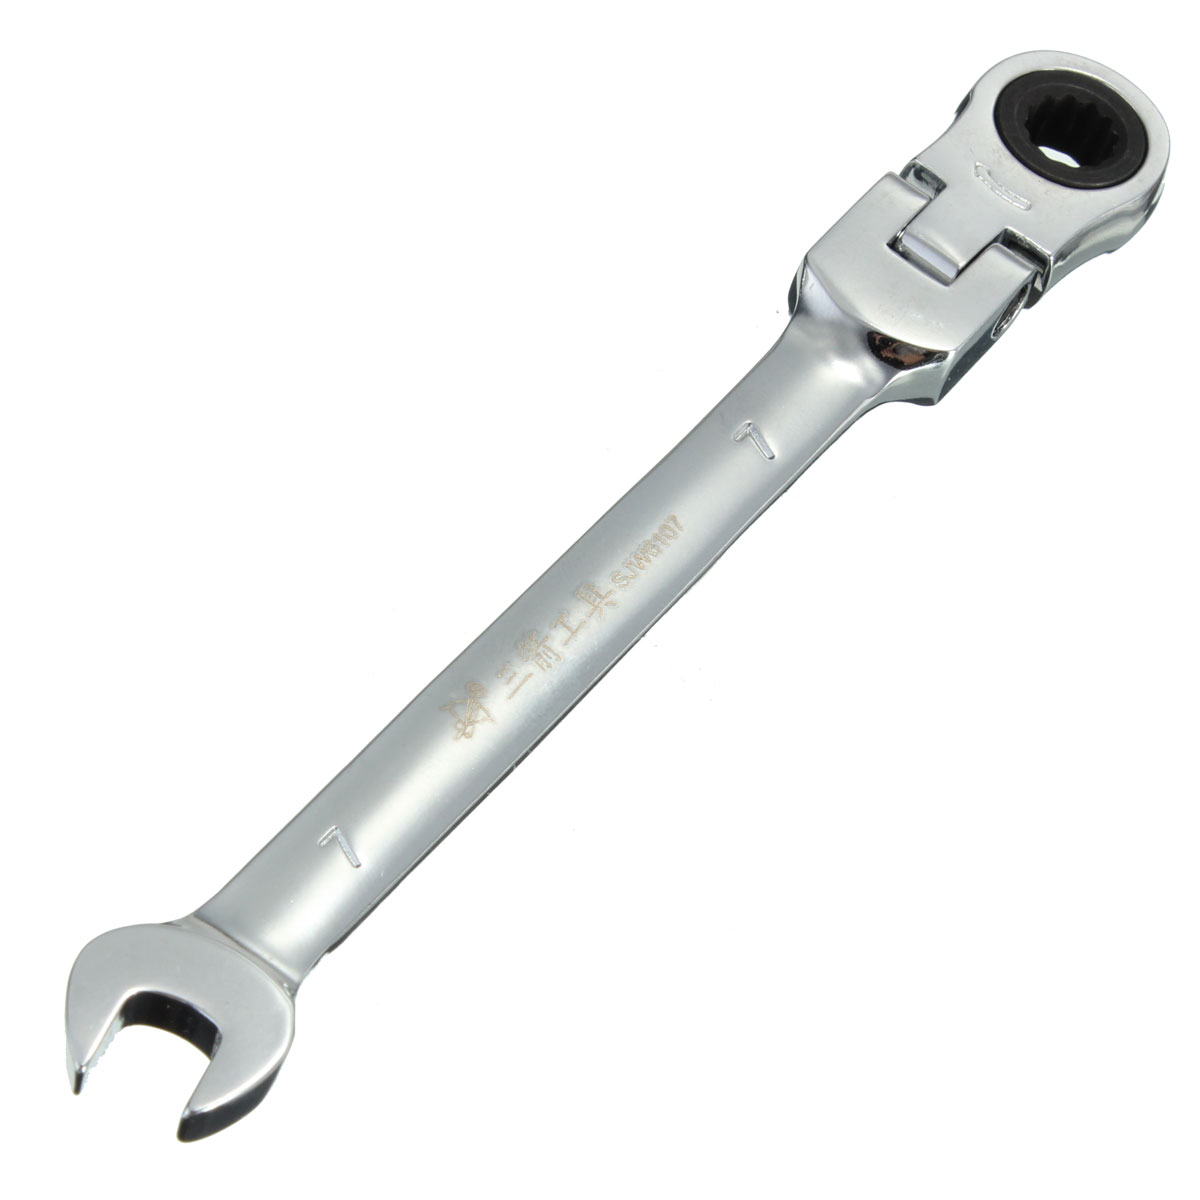 DANIU-6pcs-a-Set-6mm-12mm-Flexible-Pivoting-Head-Ratchet-Combination-Spanner-Wrench-Garage-Metric-To-1069428